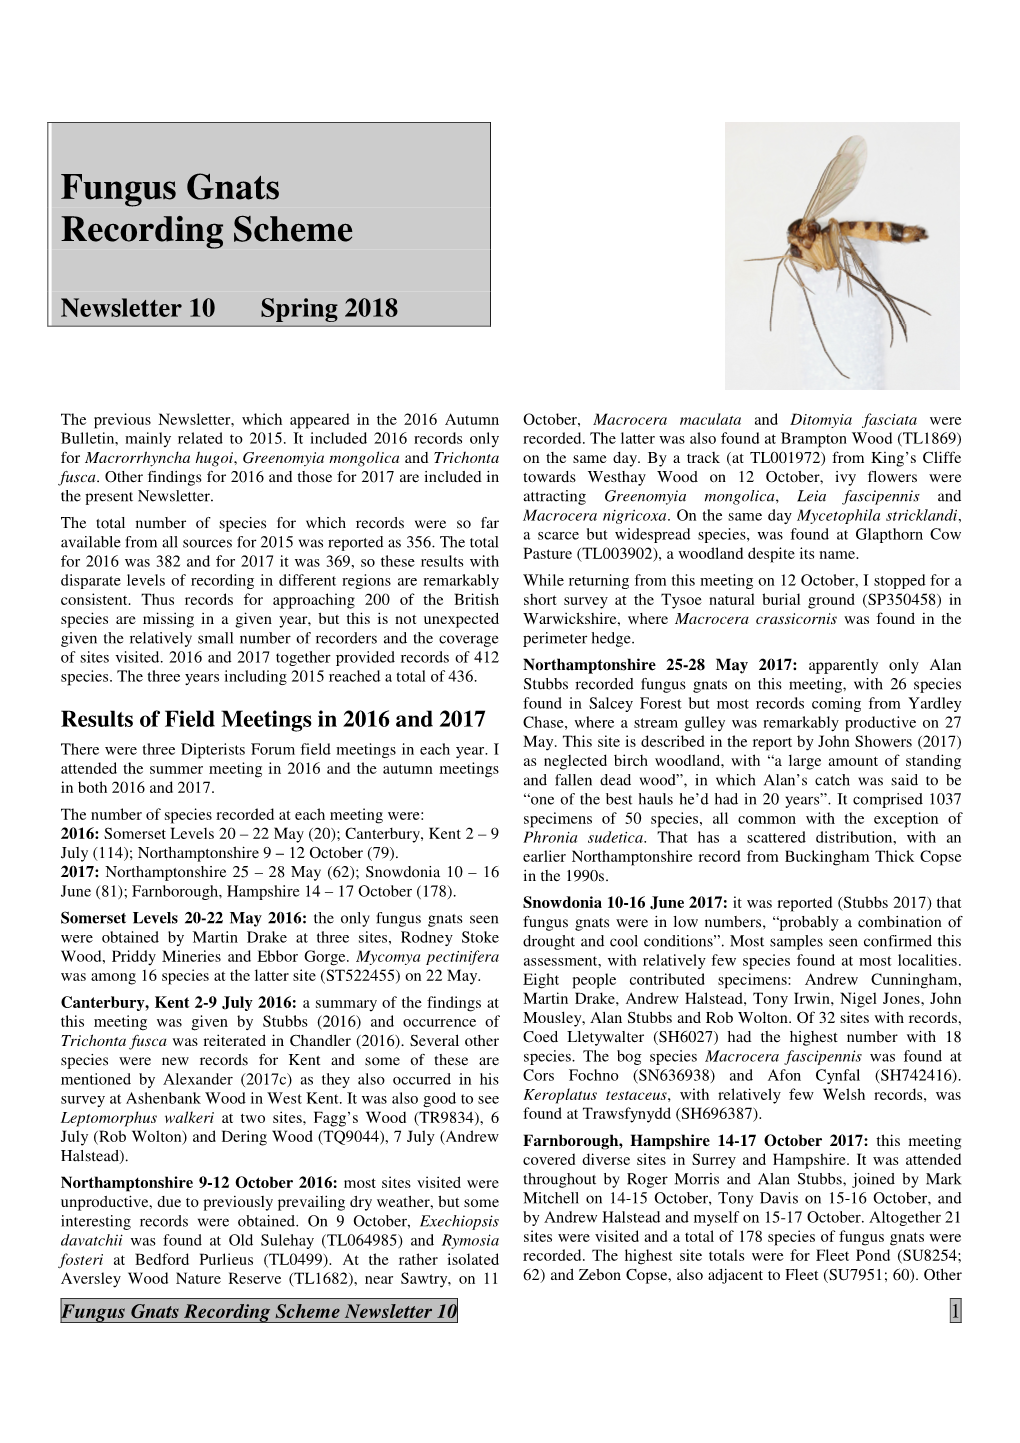 Fungus Gnats Recording Scheme Newsletter 10